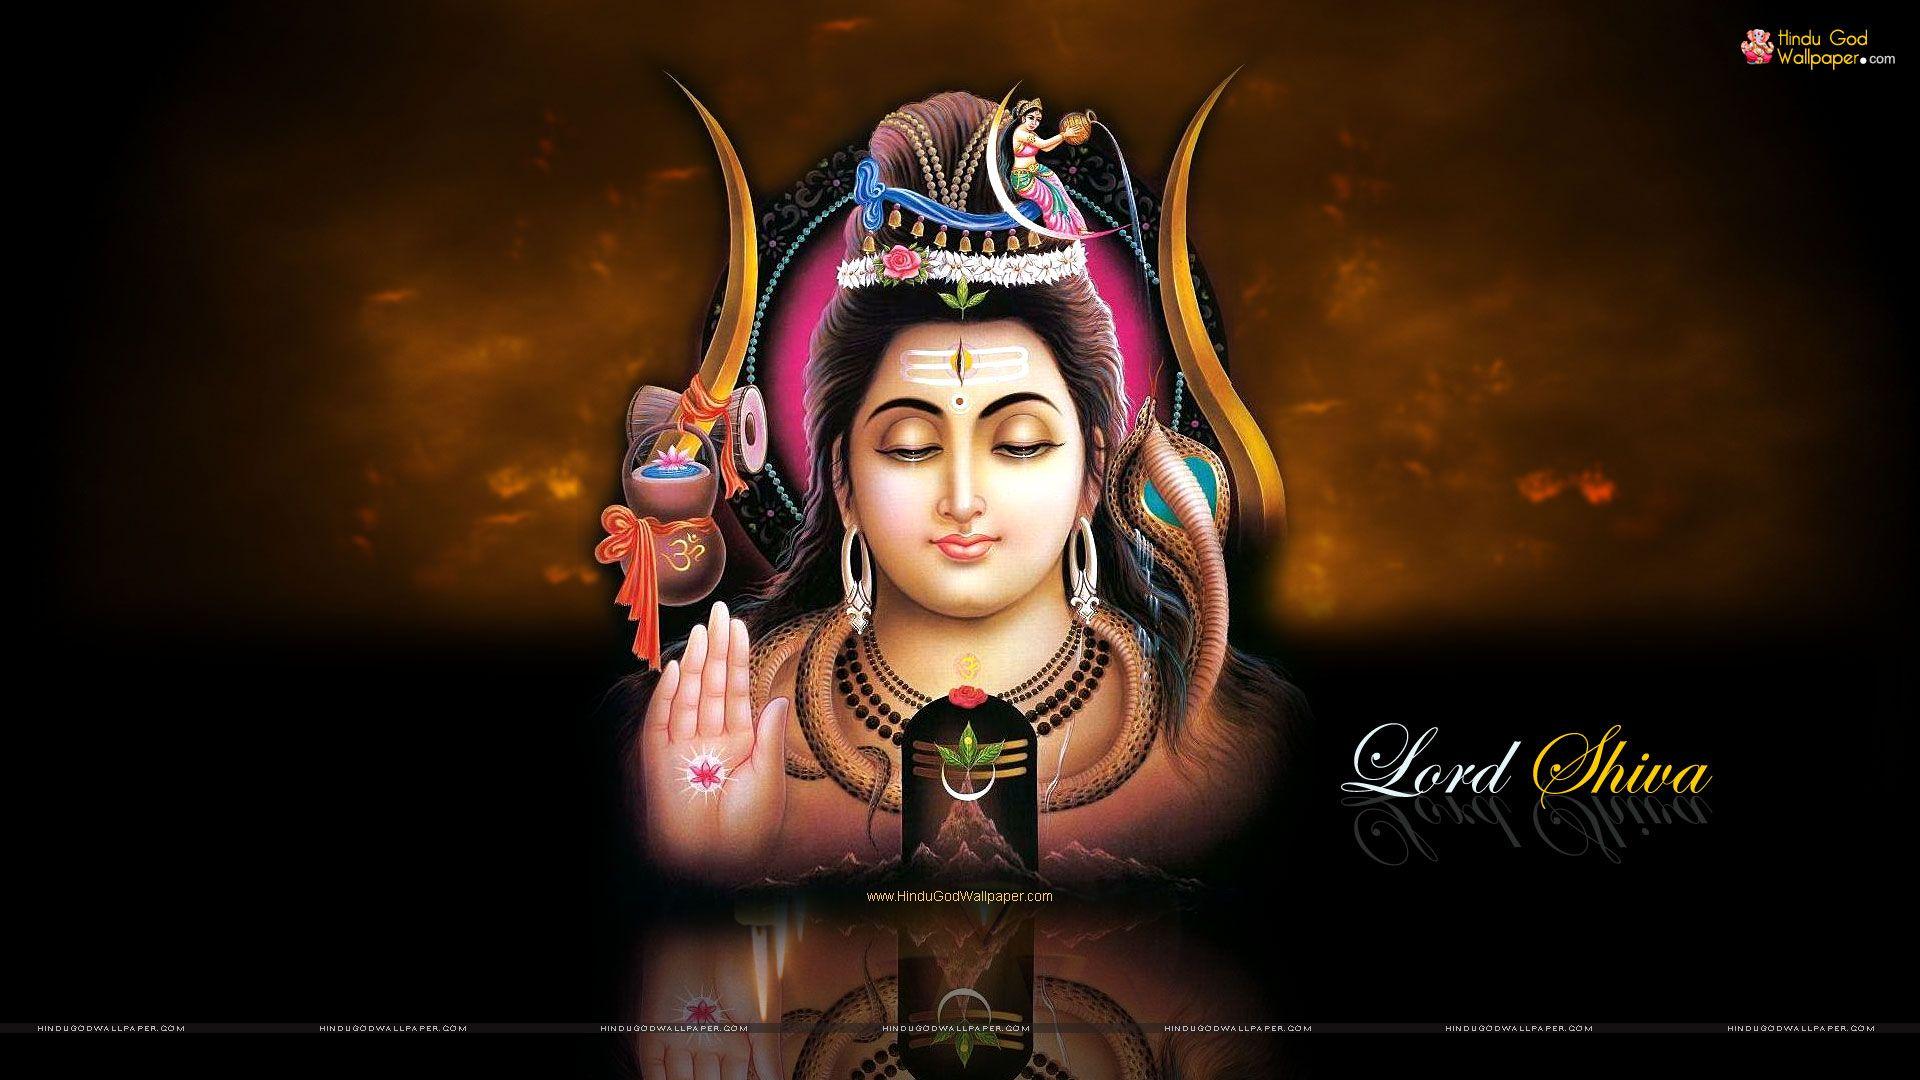 Lord Shiva HD Wallpaper Free Download for Desktop. Lord Shiva